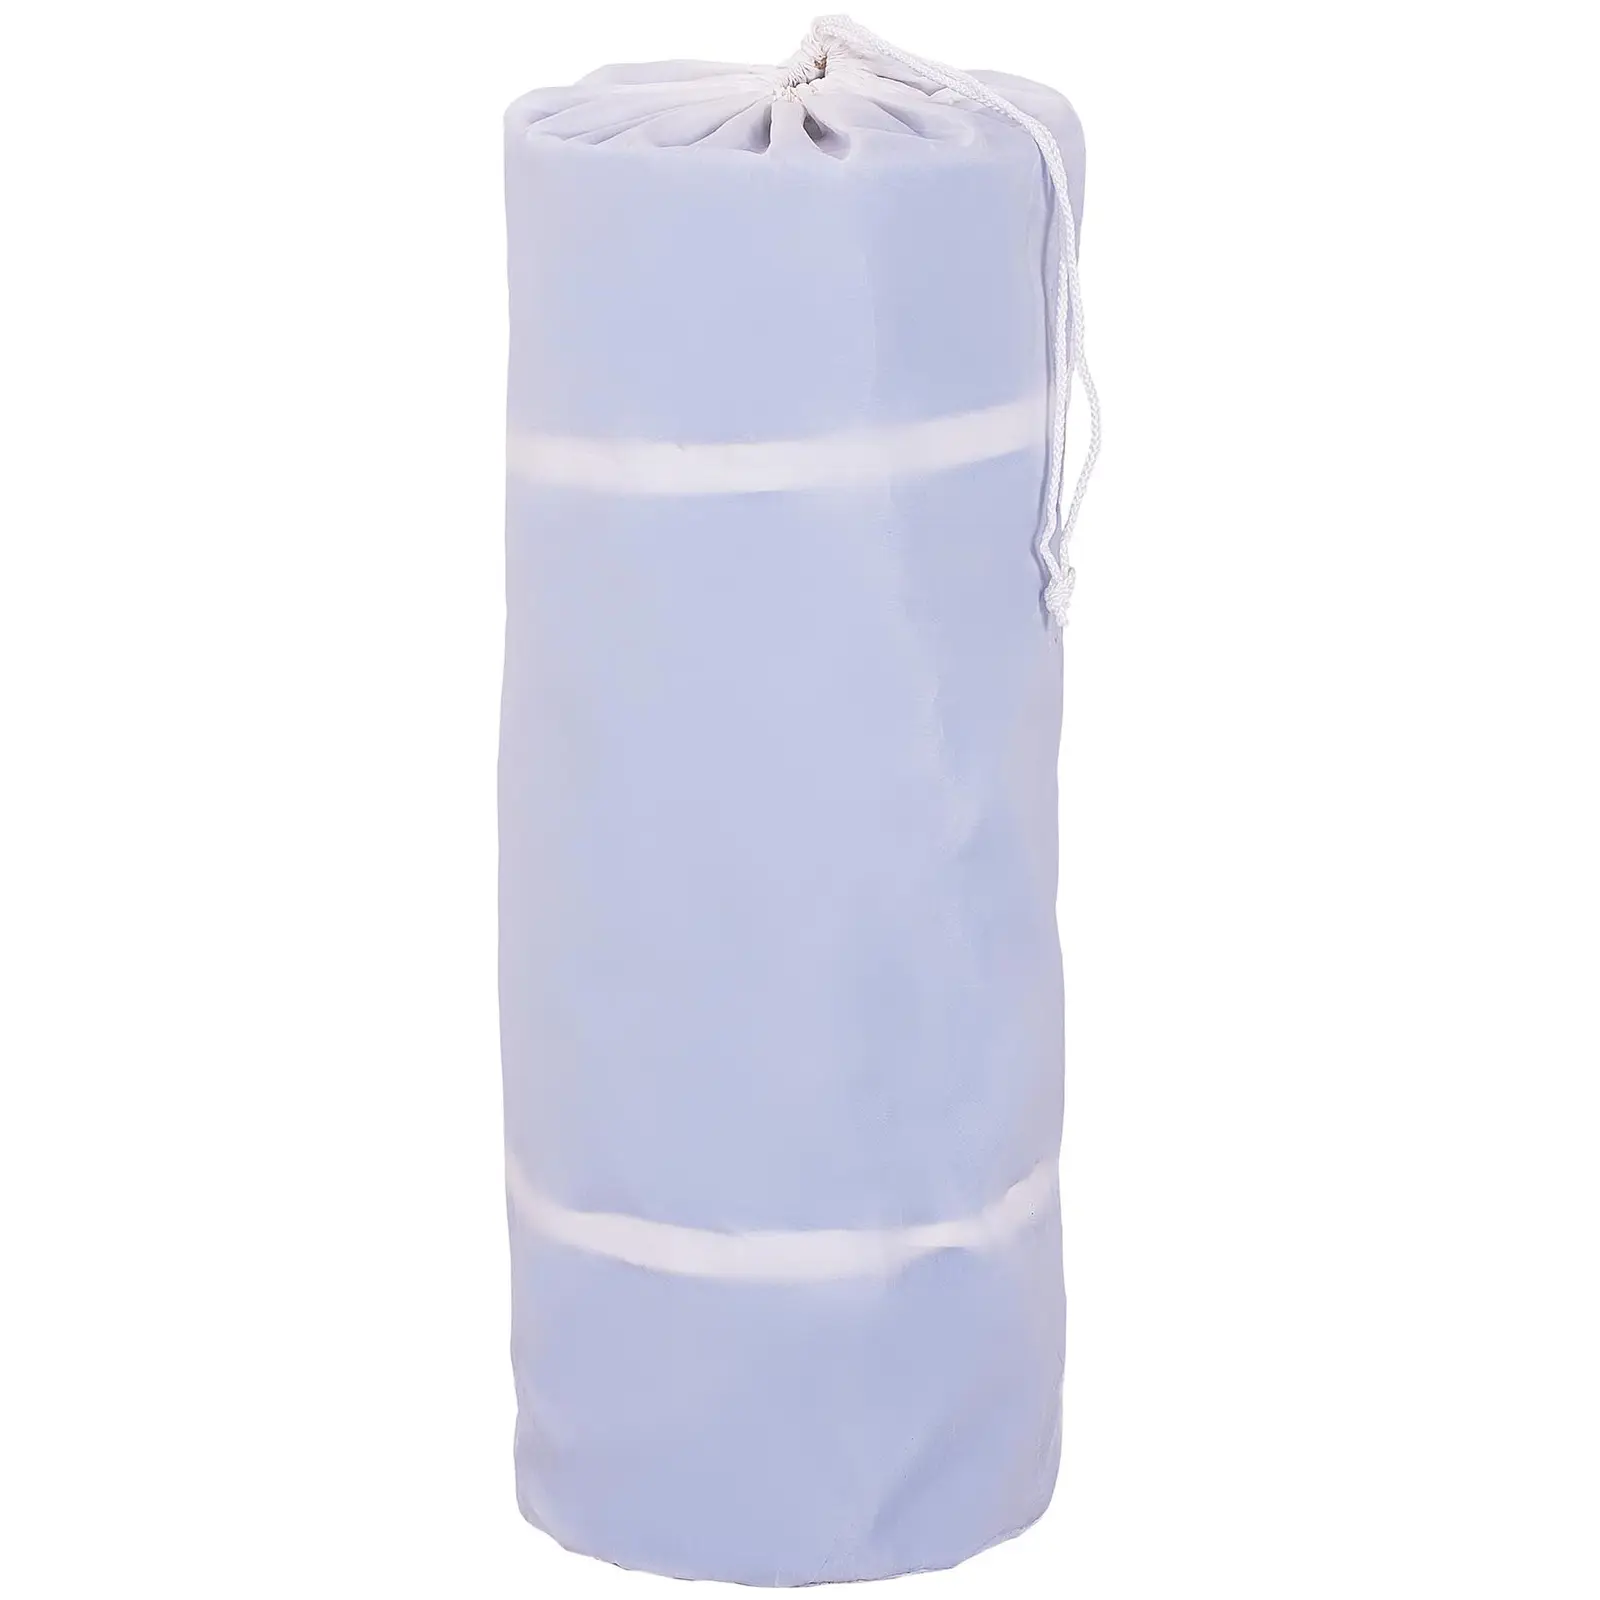 Aufblasbare Turnmatte - 600 x 100 x 20 cm - 300 kg - blau/weiß